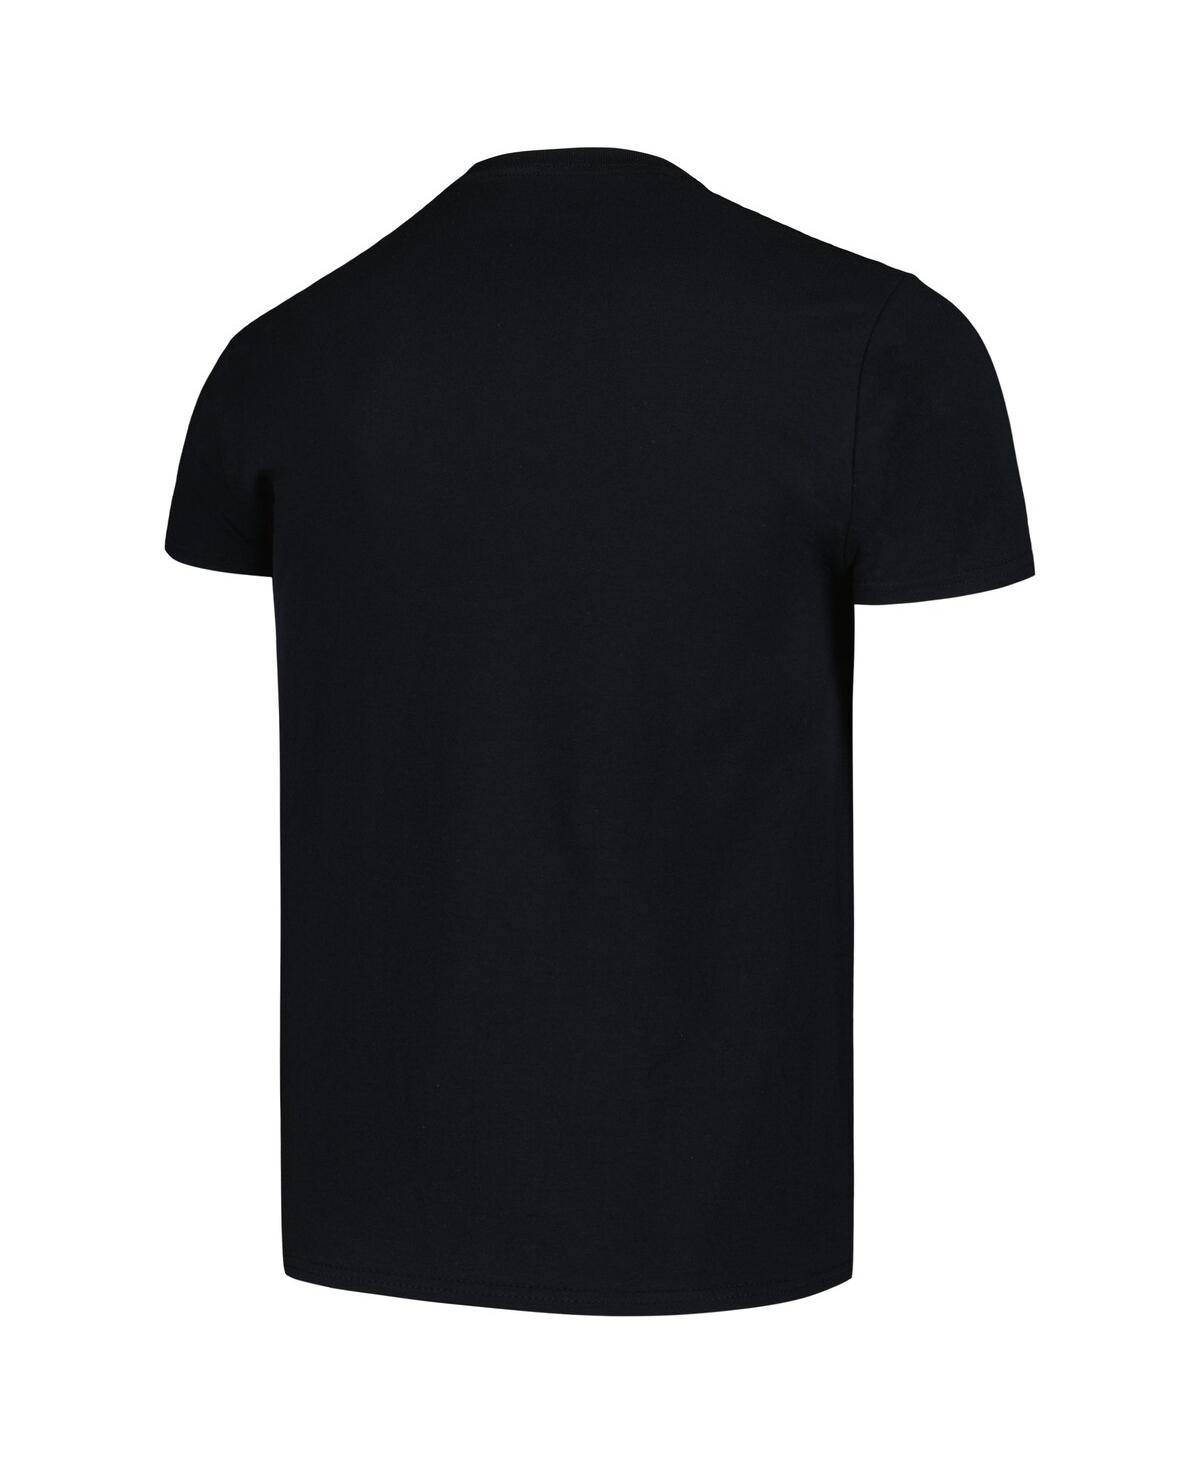 Shop Manhead Merch Men's Black Alice In Chains Dog T-shirt